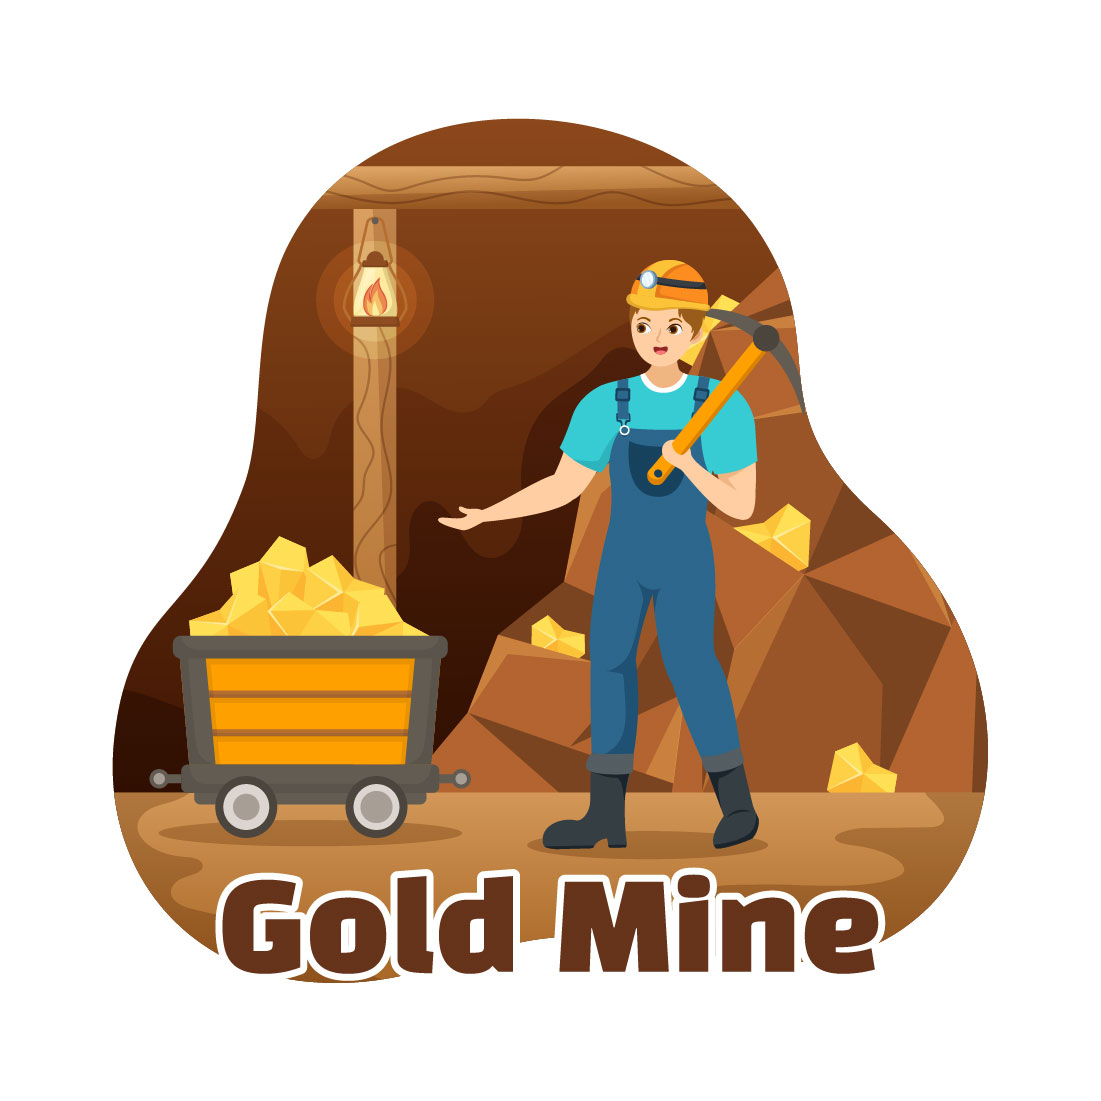 12 Gold Mine Illustration preview image.